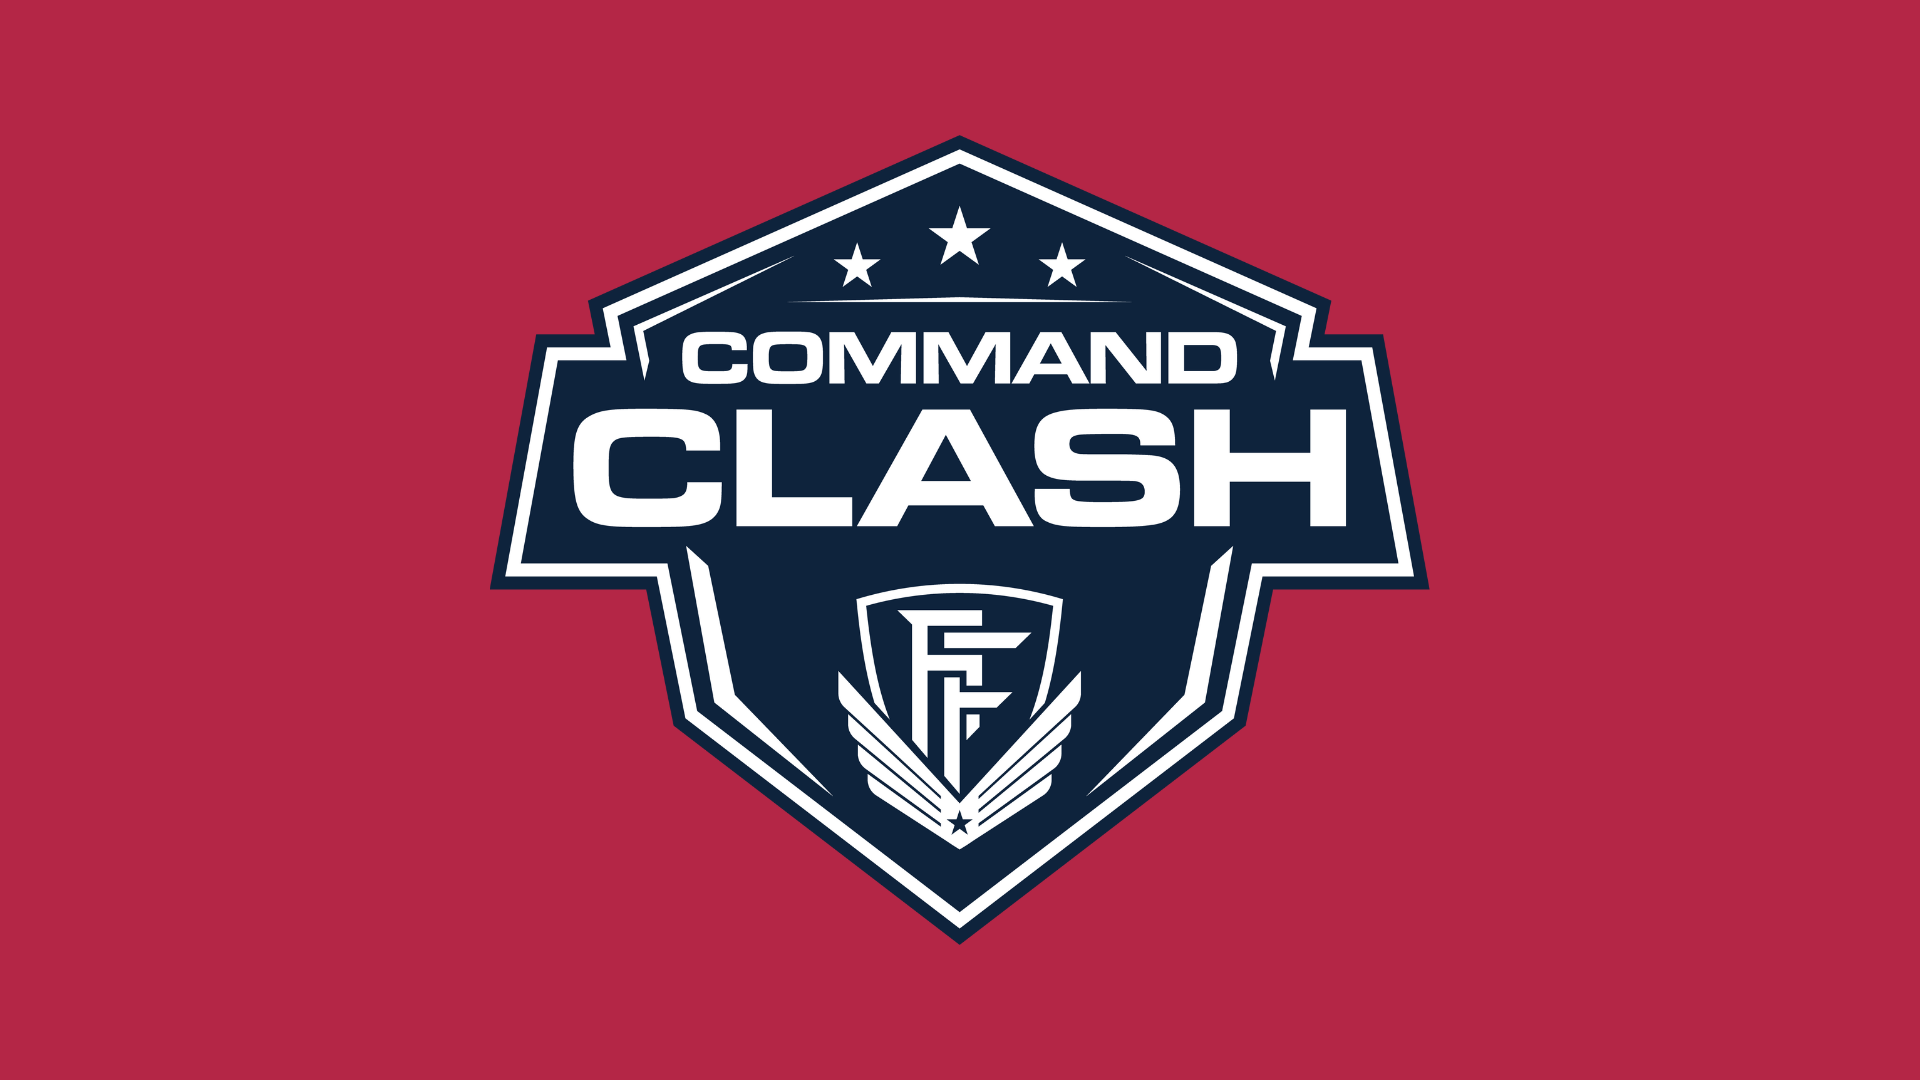 Command Clash Episode 1 - Intro